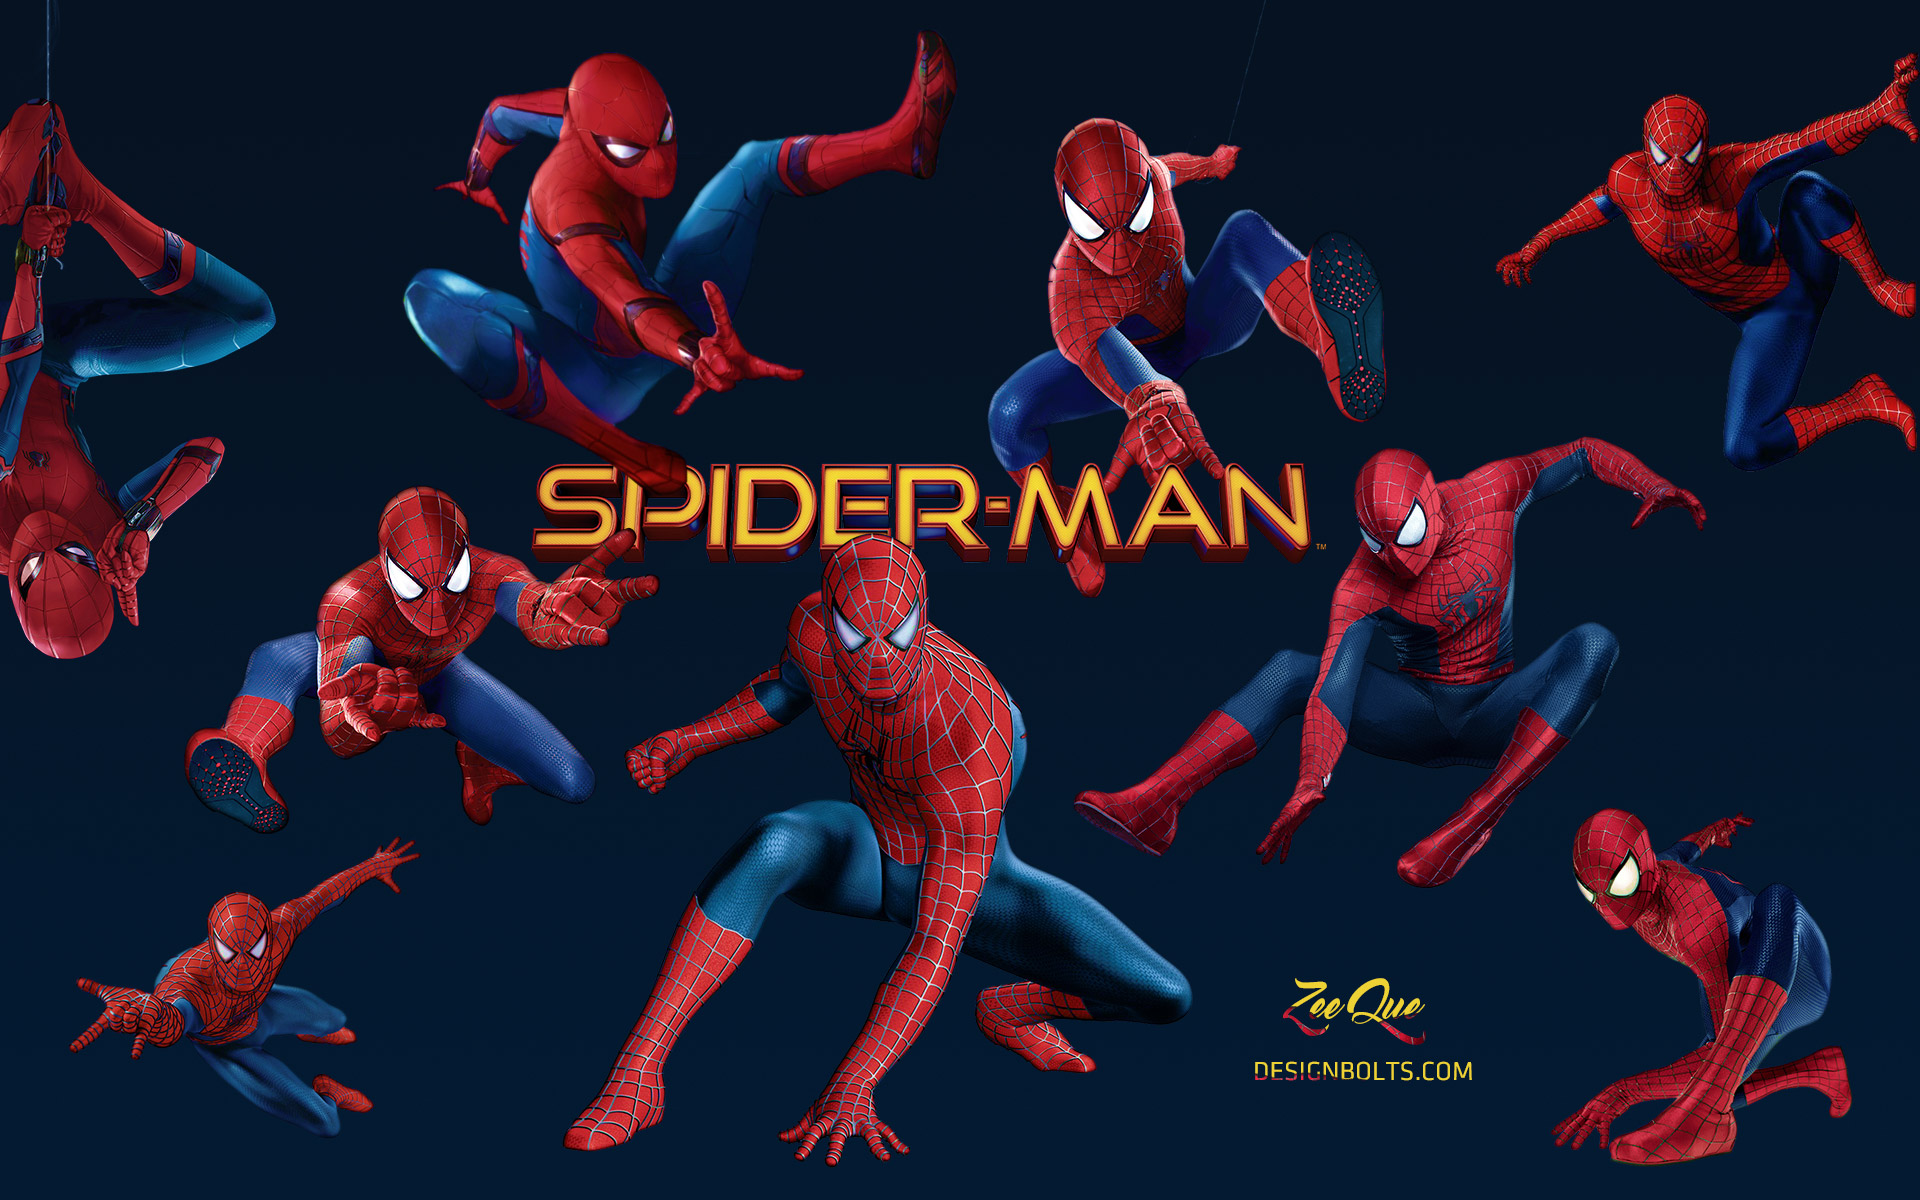 spiderman wallpaper hd,spider man,superhero,fictional character,animation,team